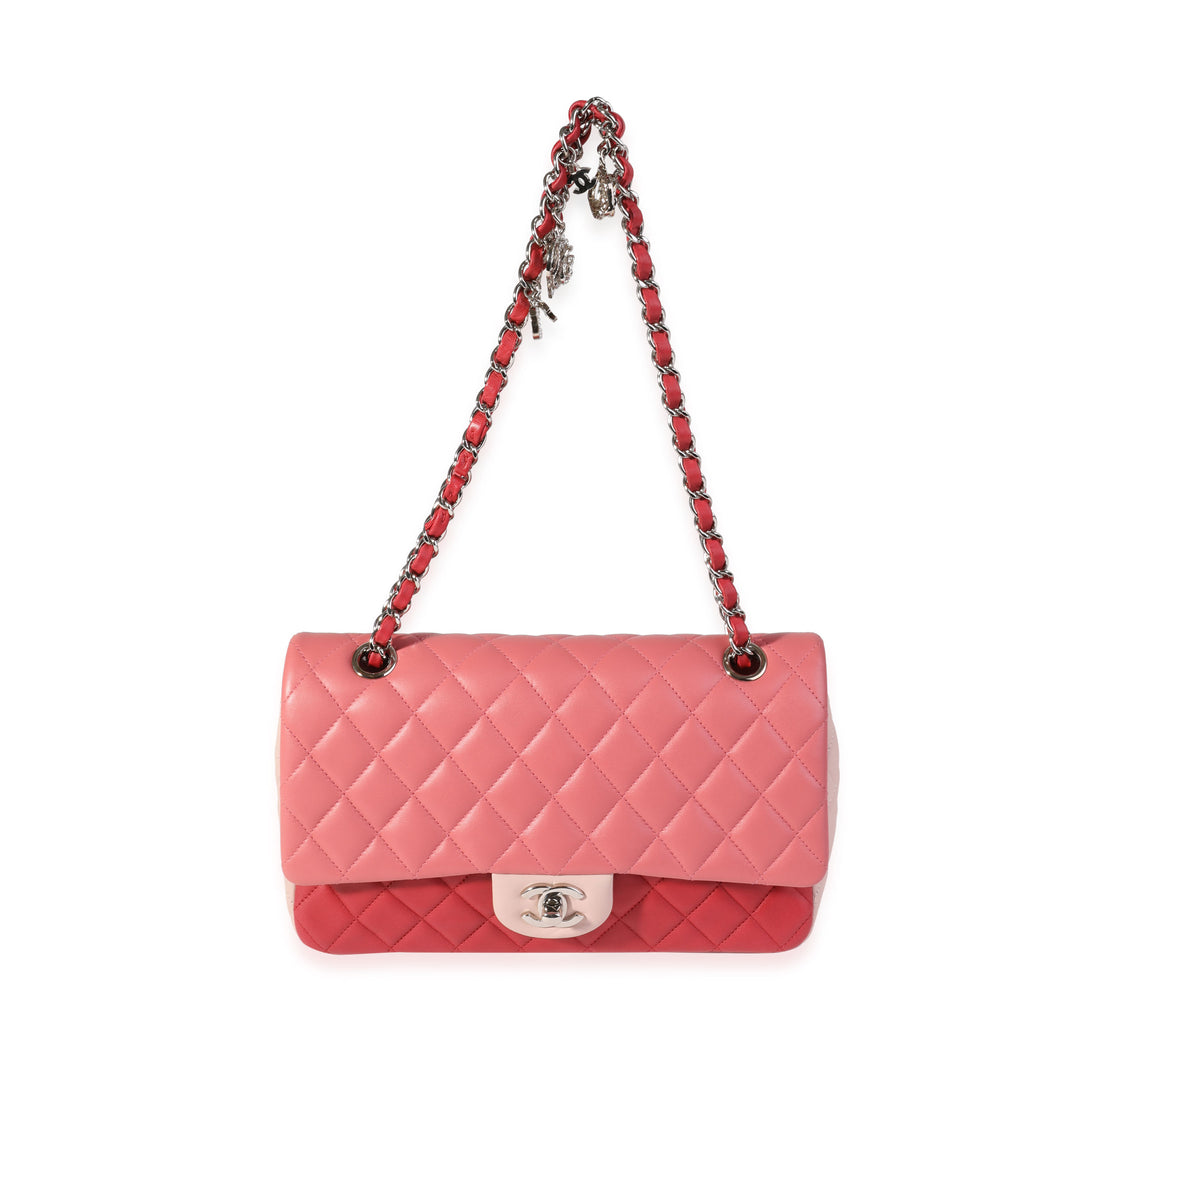 pink flap bag